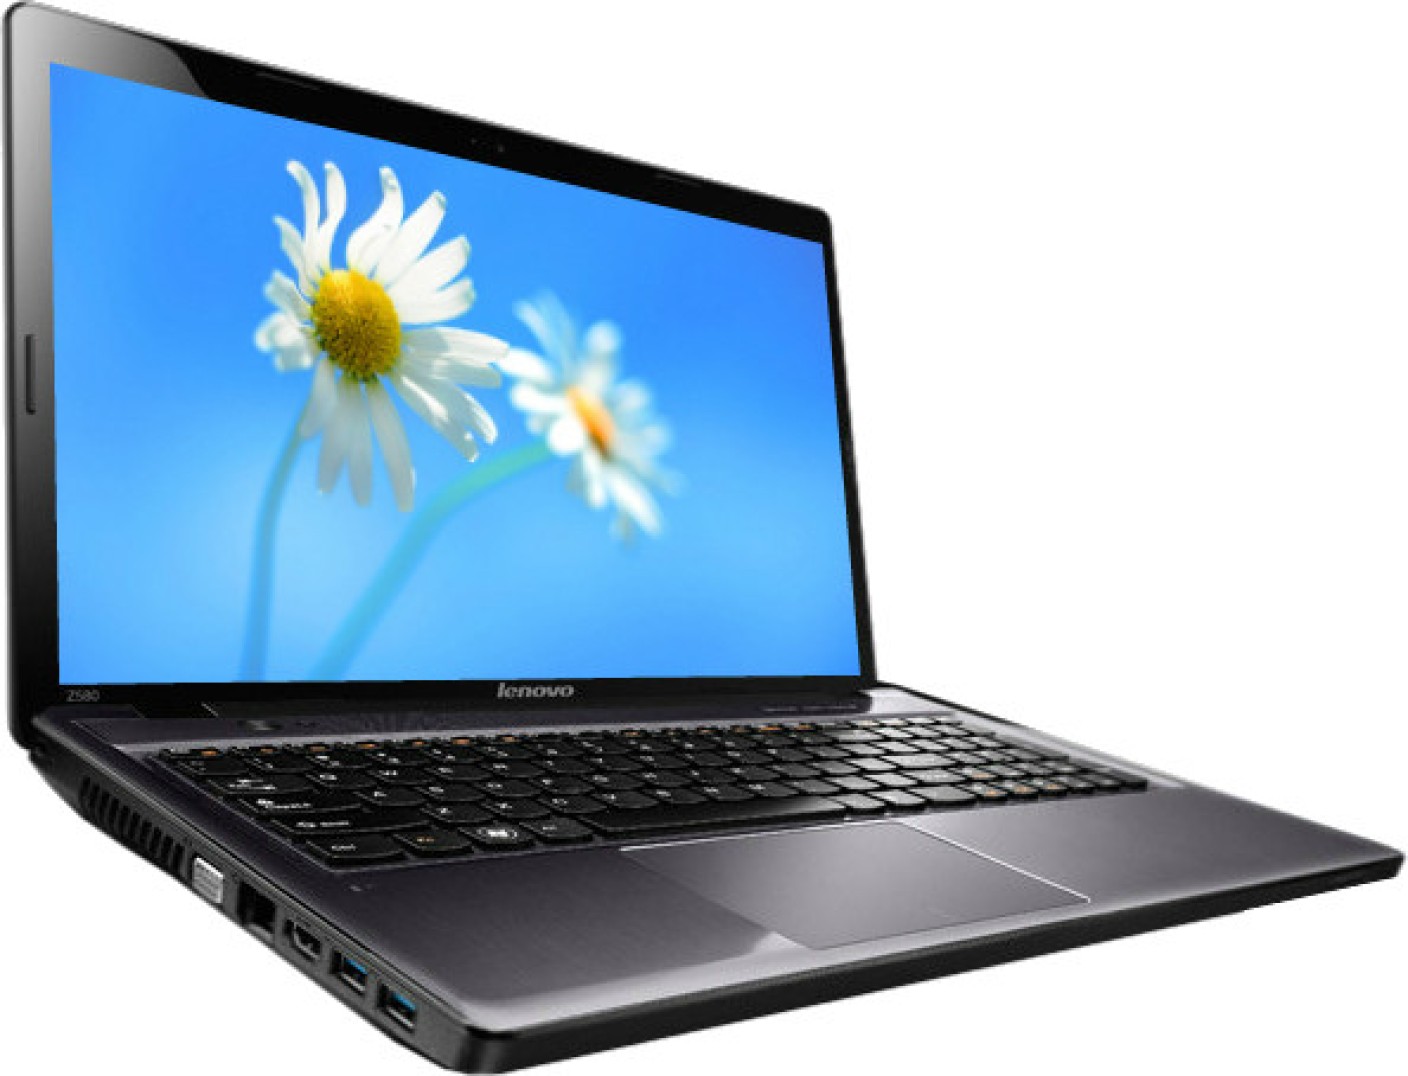 Lenovo Ideapad Z580 (59-347567) Laptop (3rd Gen Ci3/ 4GB ...